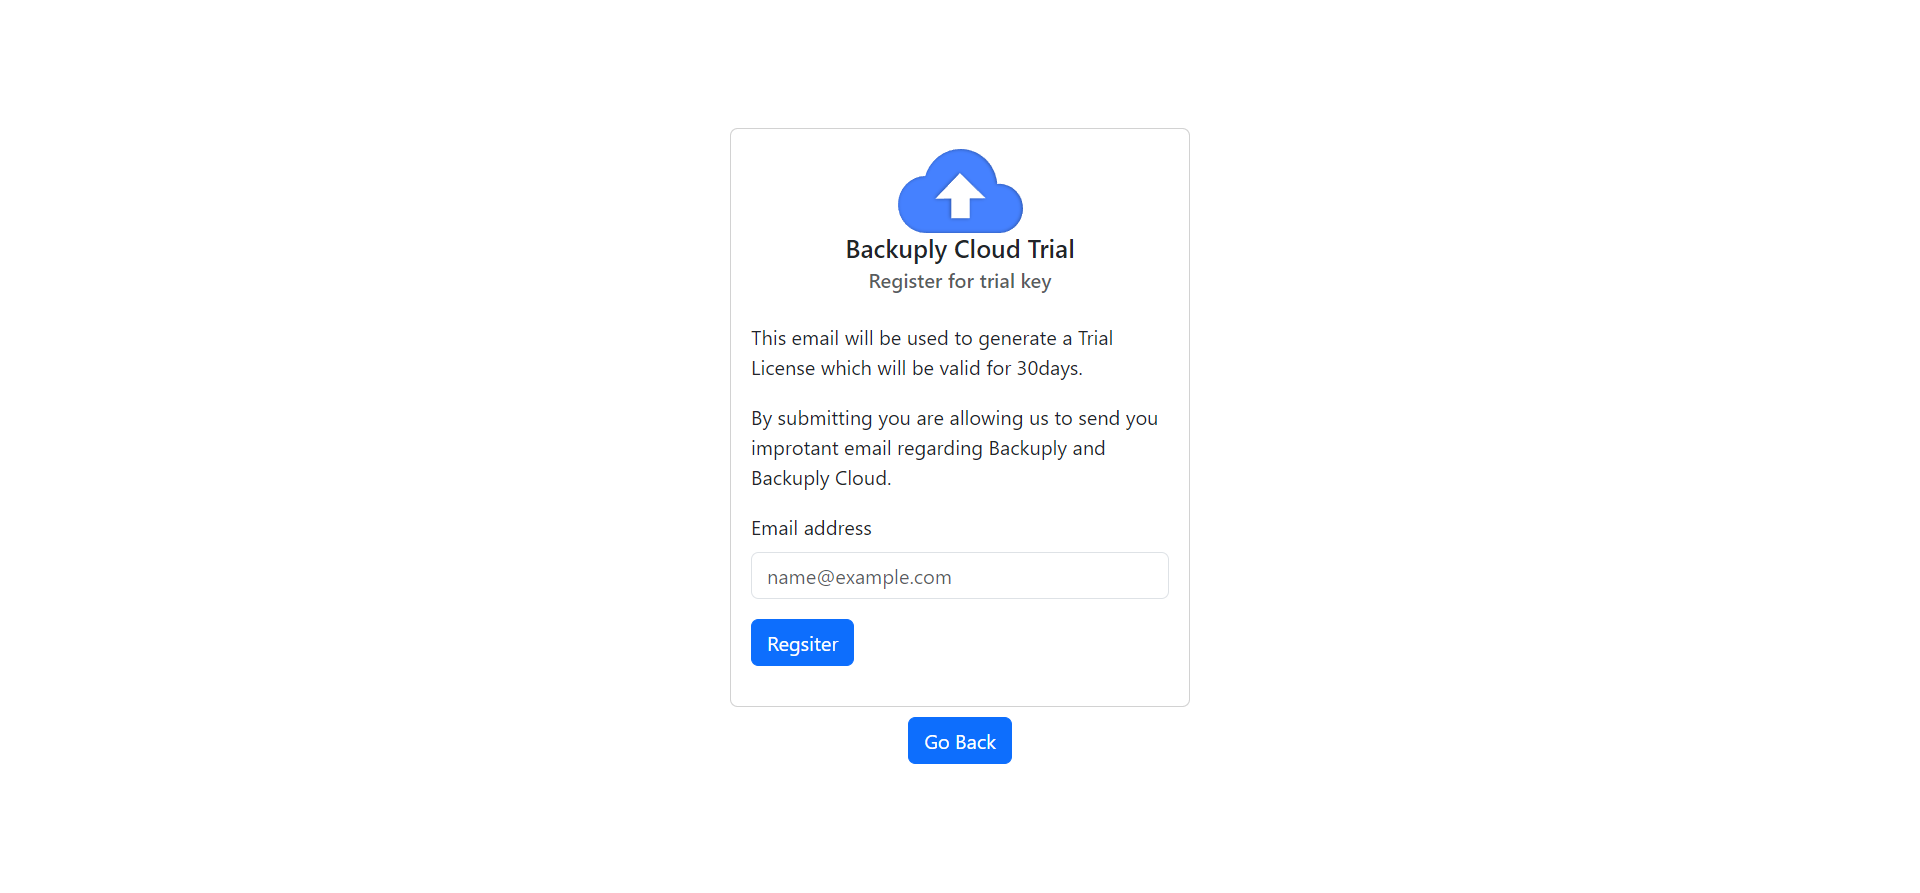 Backuply Cloud trial registration